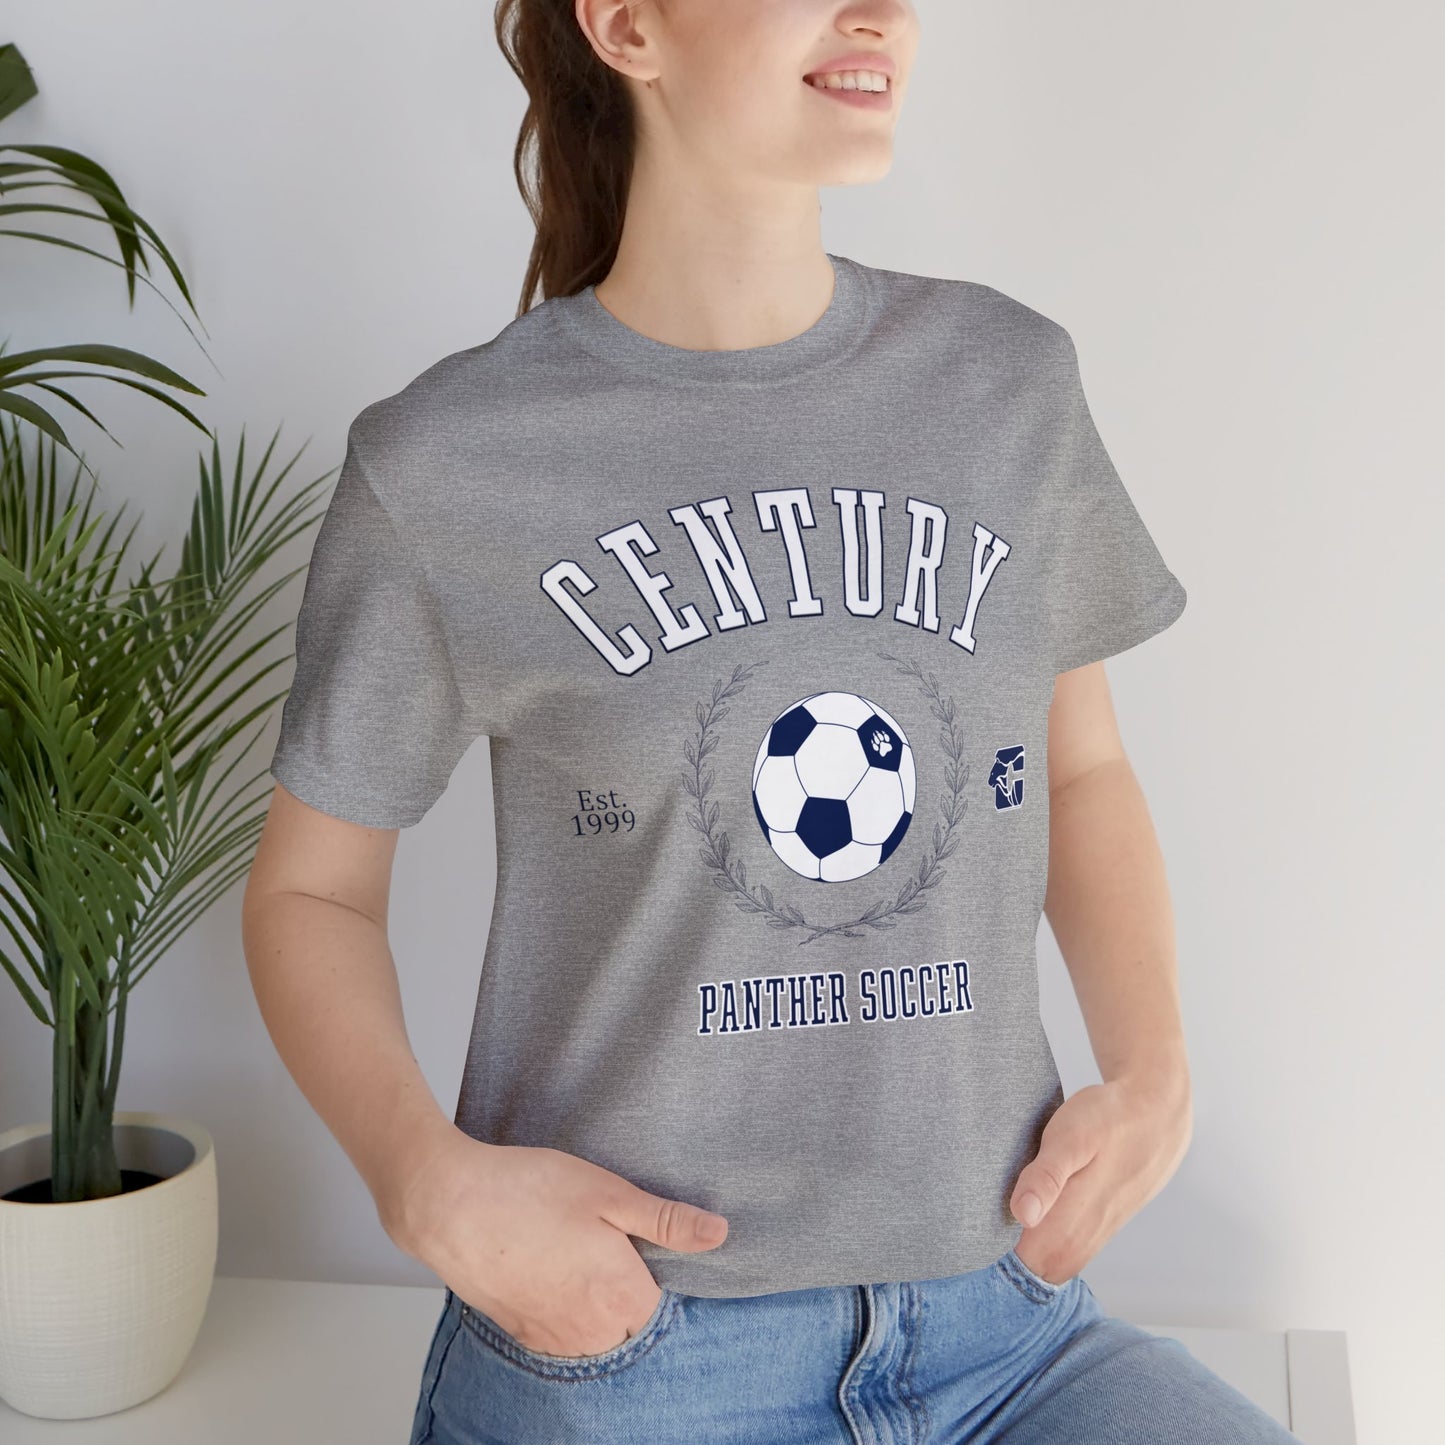 Century Soccer